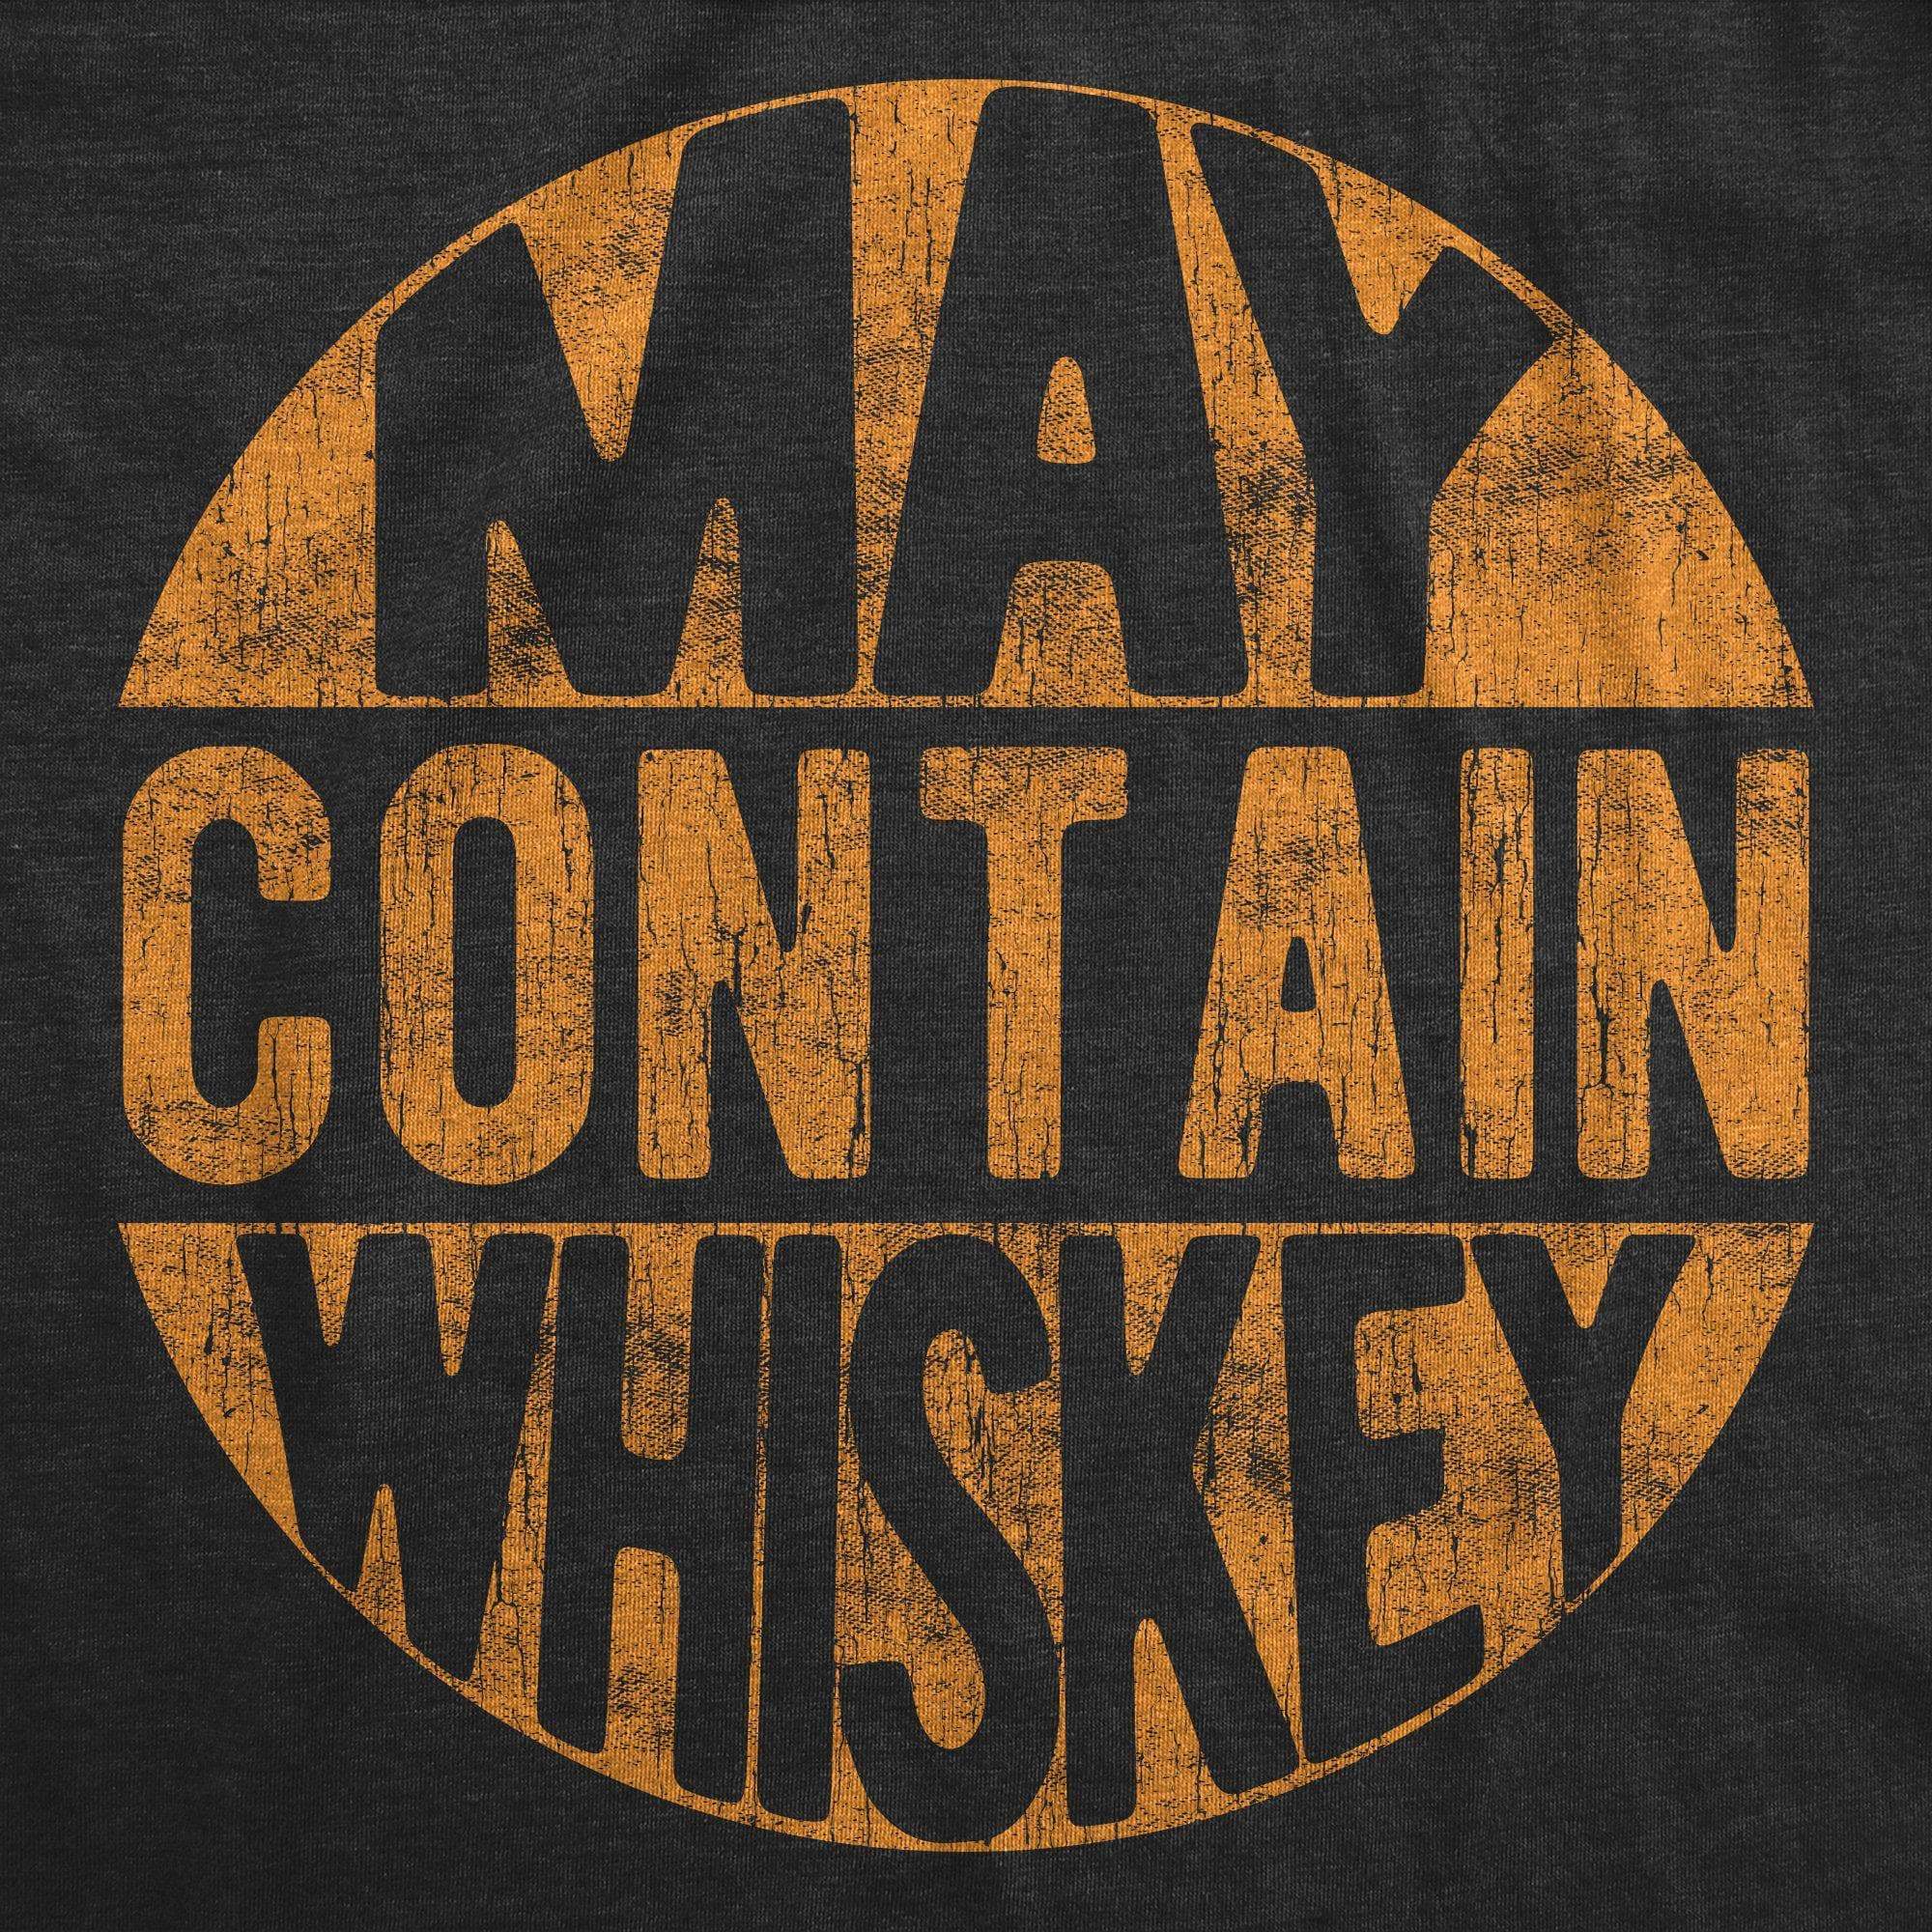 May Contain Whiskey Men's Tshirt - Crazy Dog T-Shirts